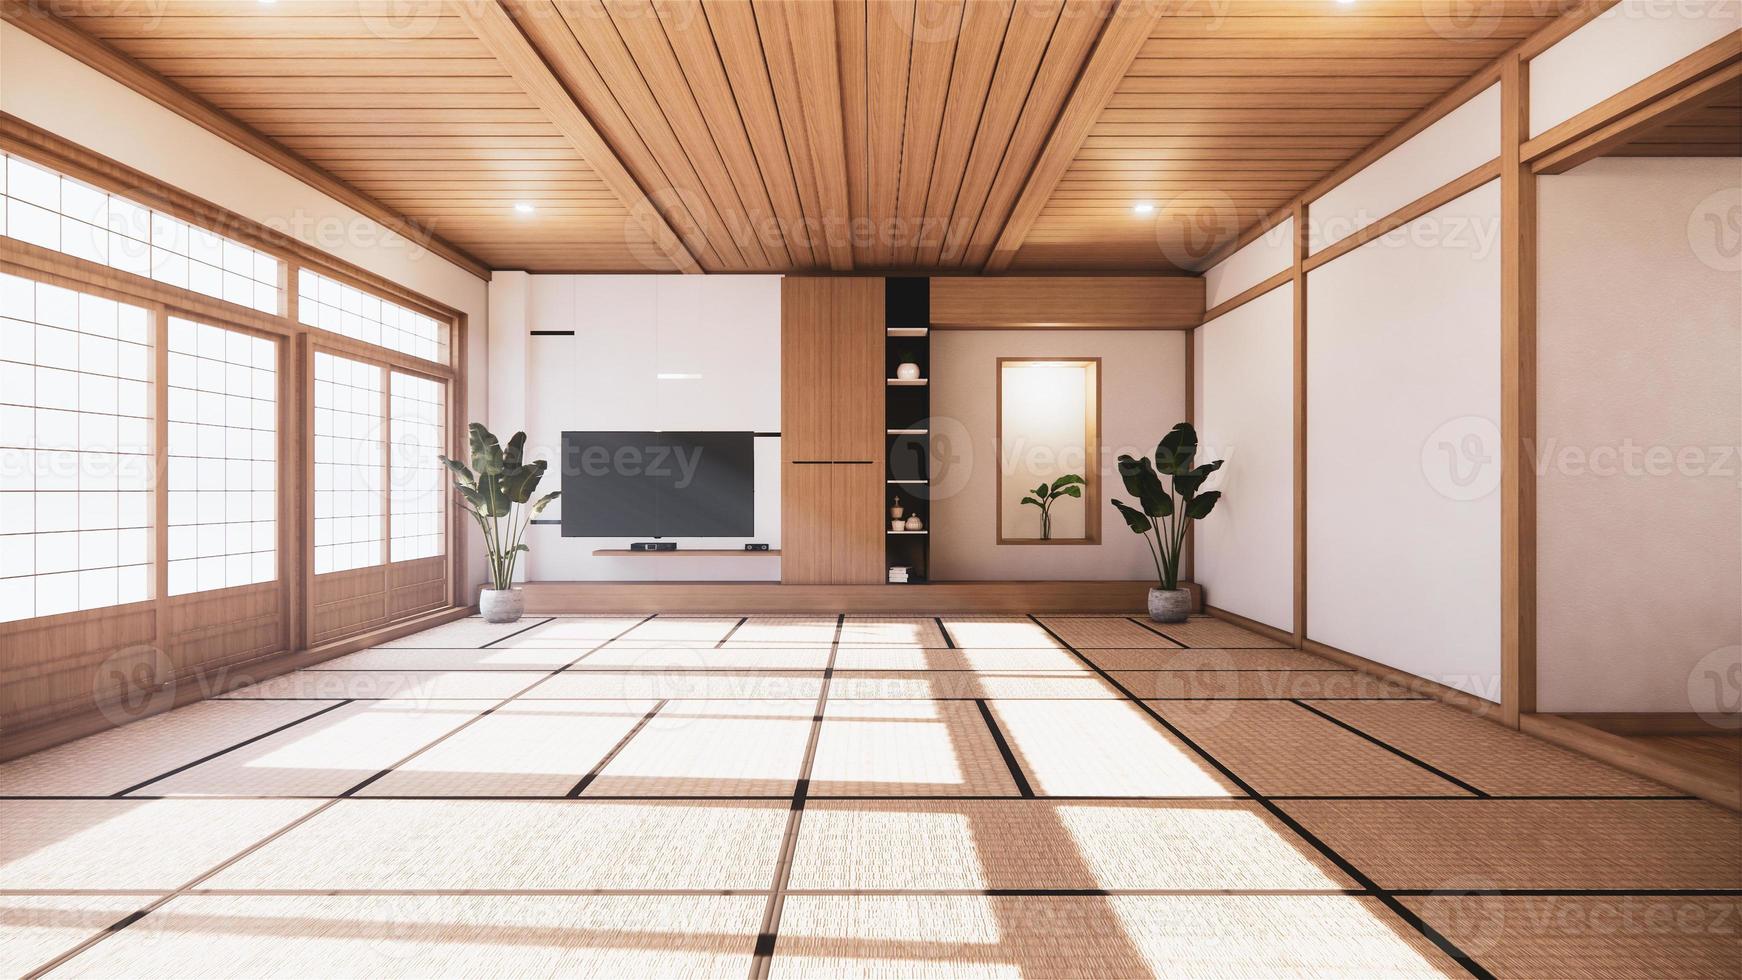 tv-kast en plank wandontwerp zen interieur van woonkamer japanse stijl.3d-rendering foto